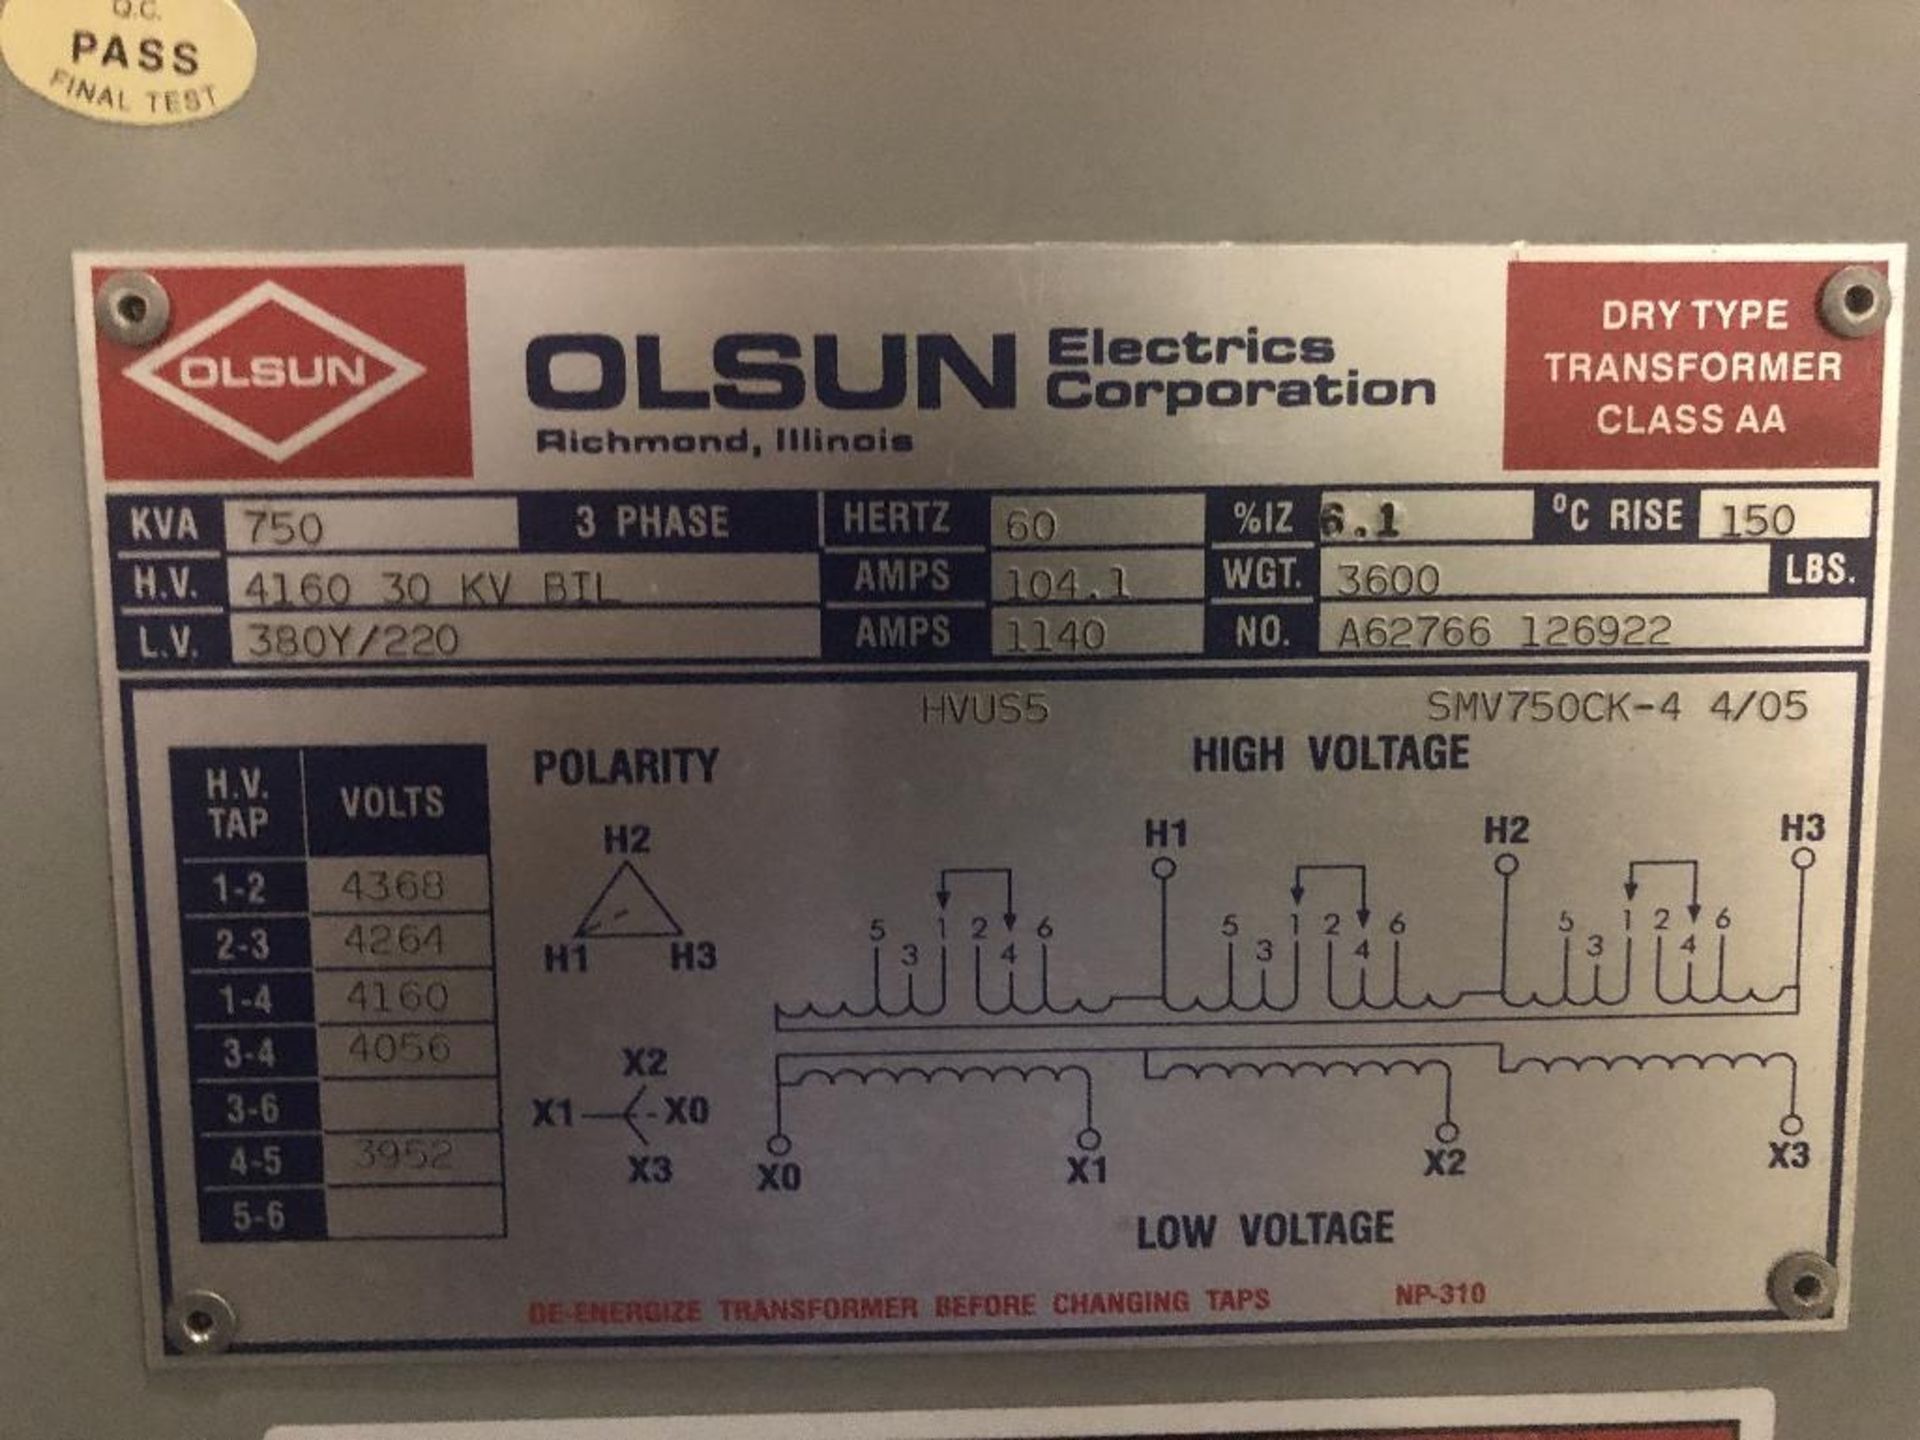 1 Olsun Electronics Transformer Model SMV750CK-4 4/05 , NO. A627 126922, Power 750 KVA/ 4160 30 KV B - Image 7 of 8